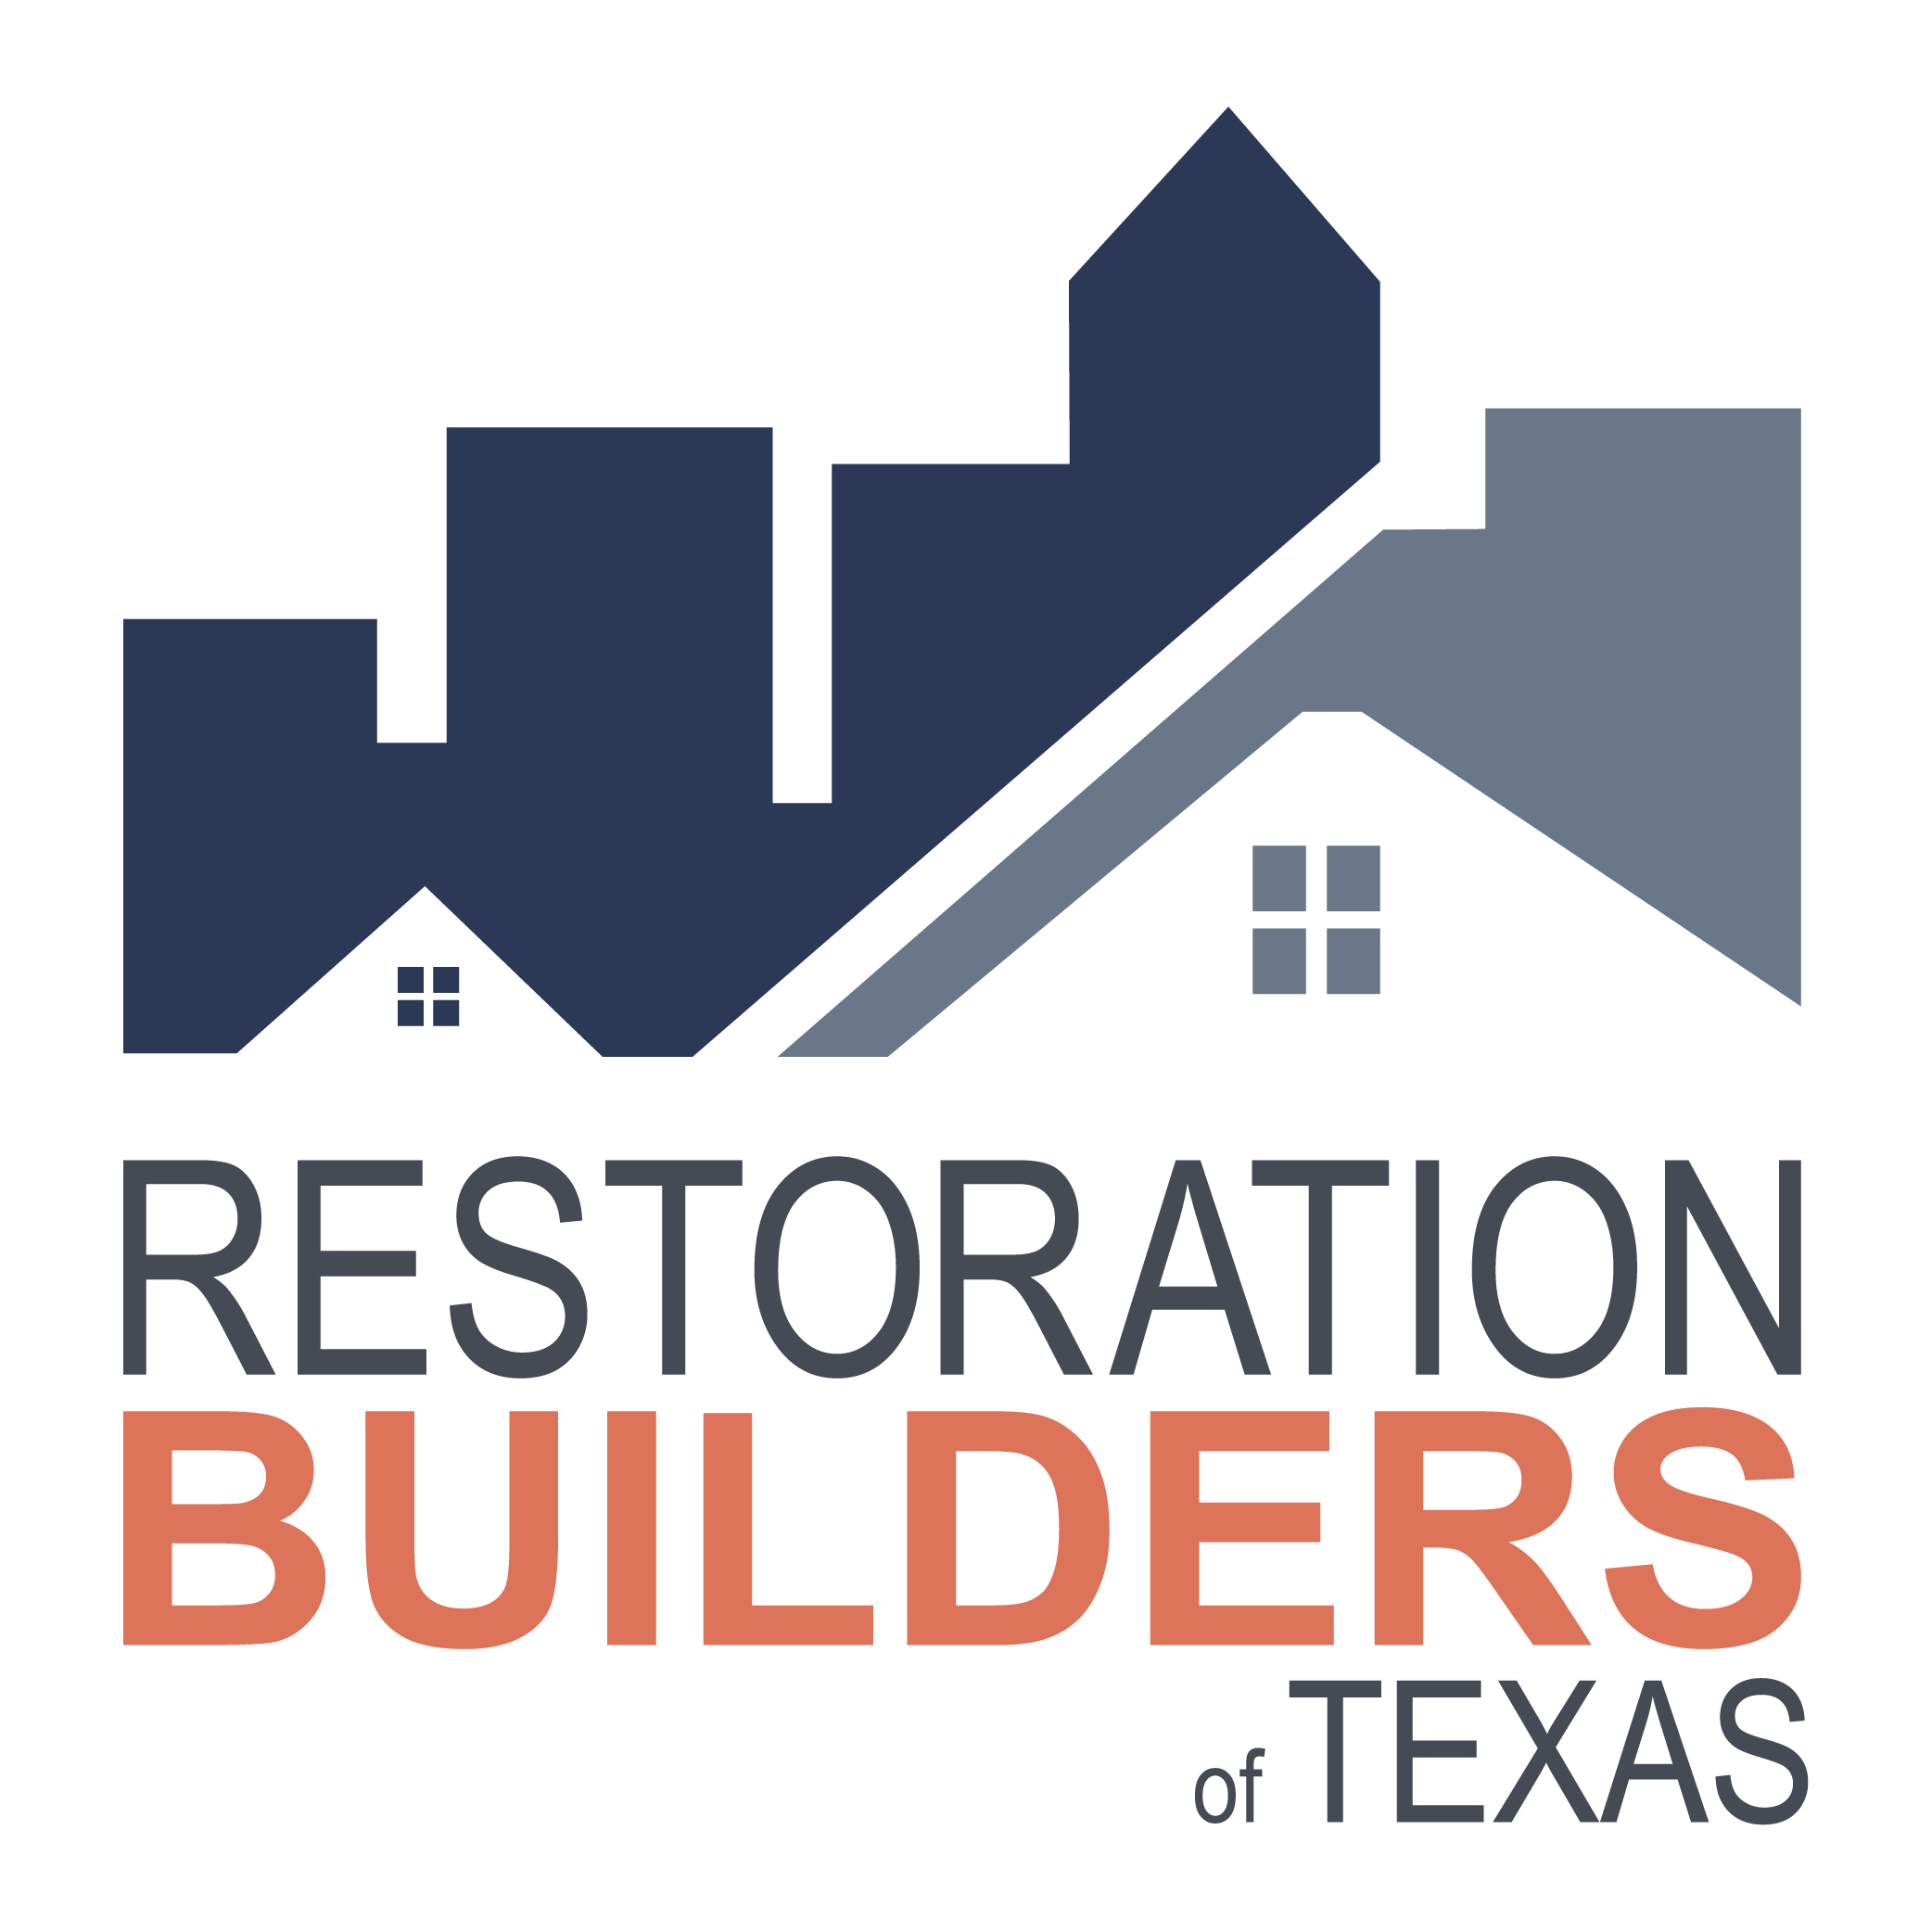 Restoration Builders of Texas